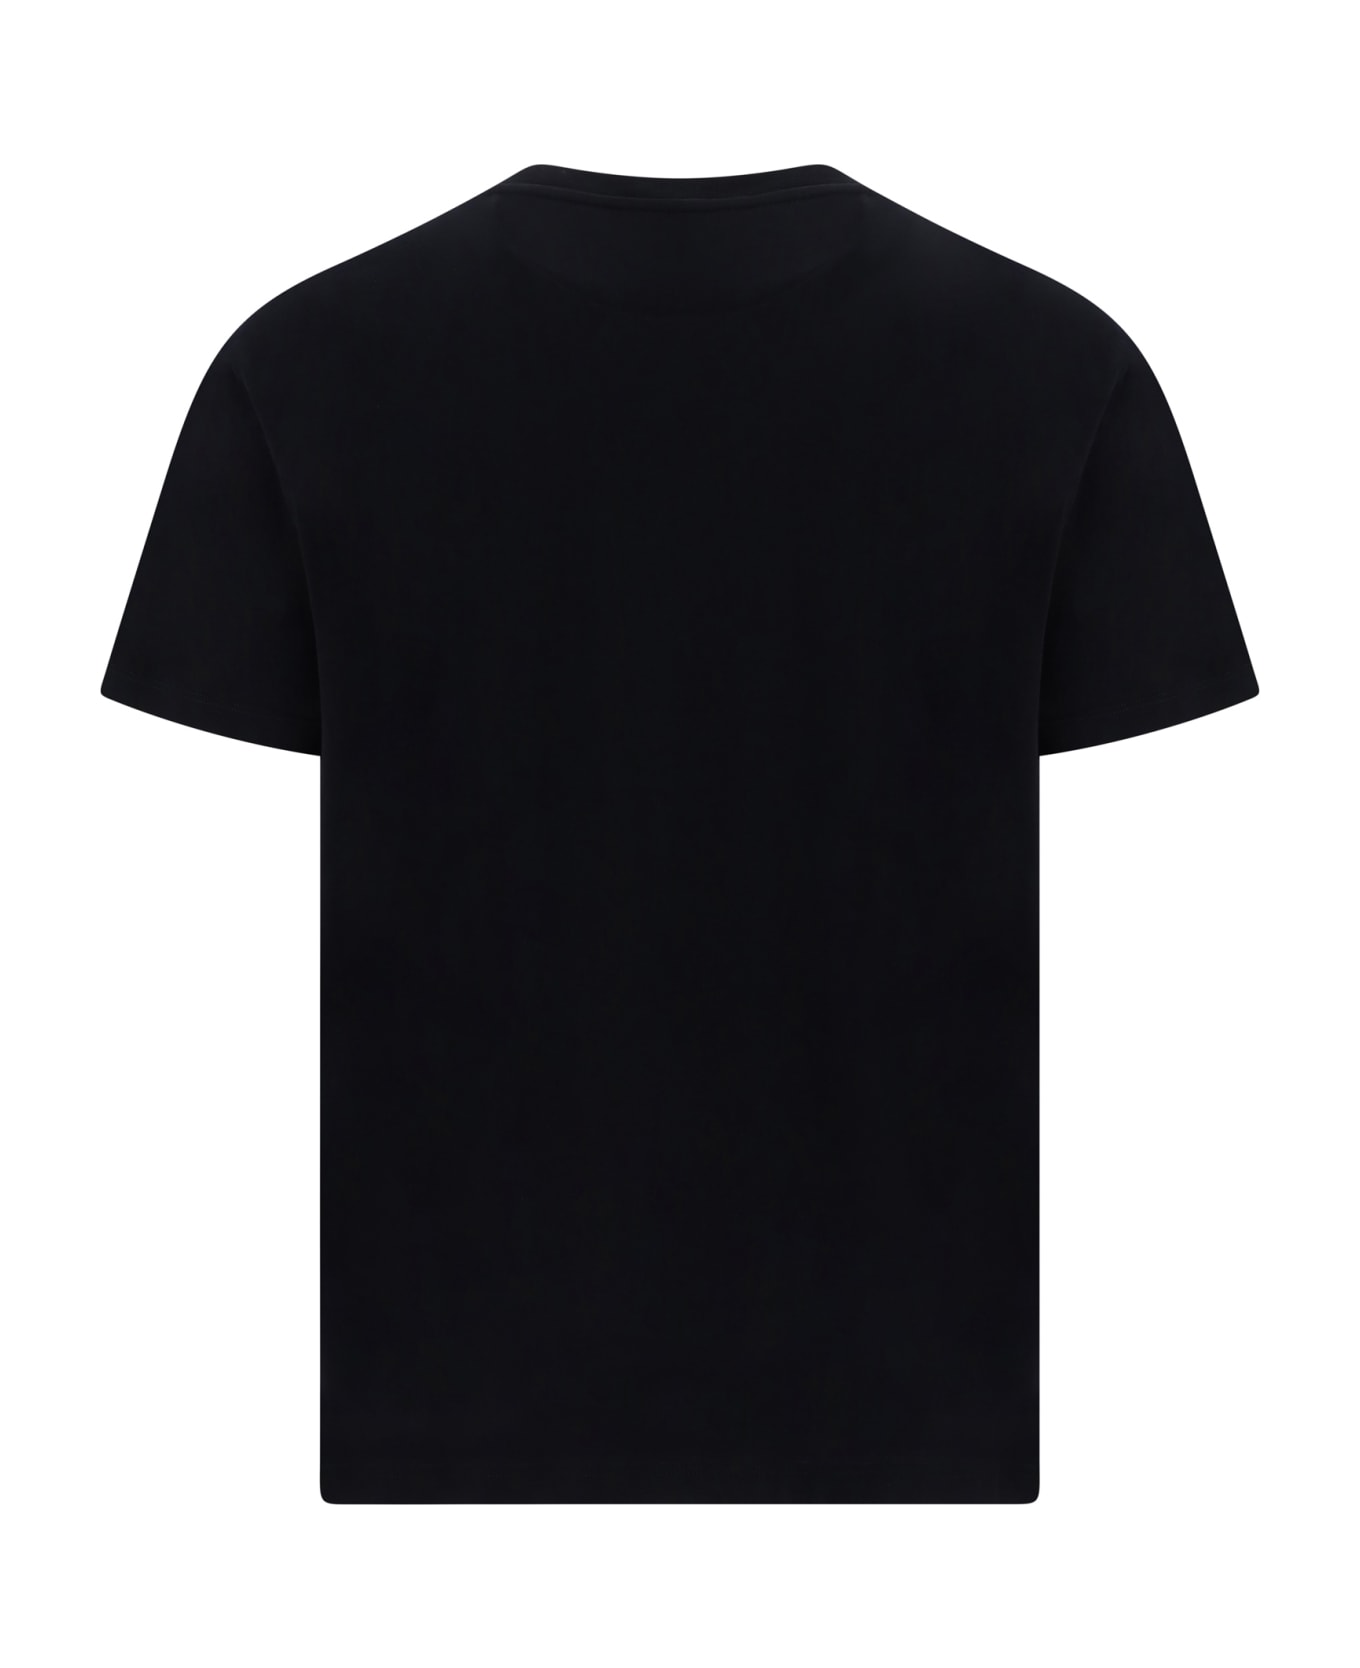 Valentino Garavani T-shirt - Nero/grigio